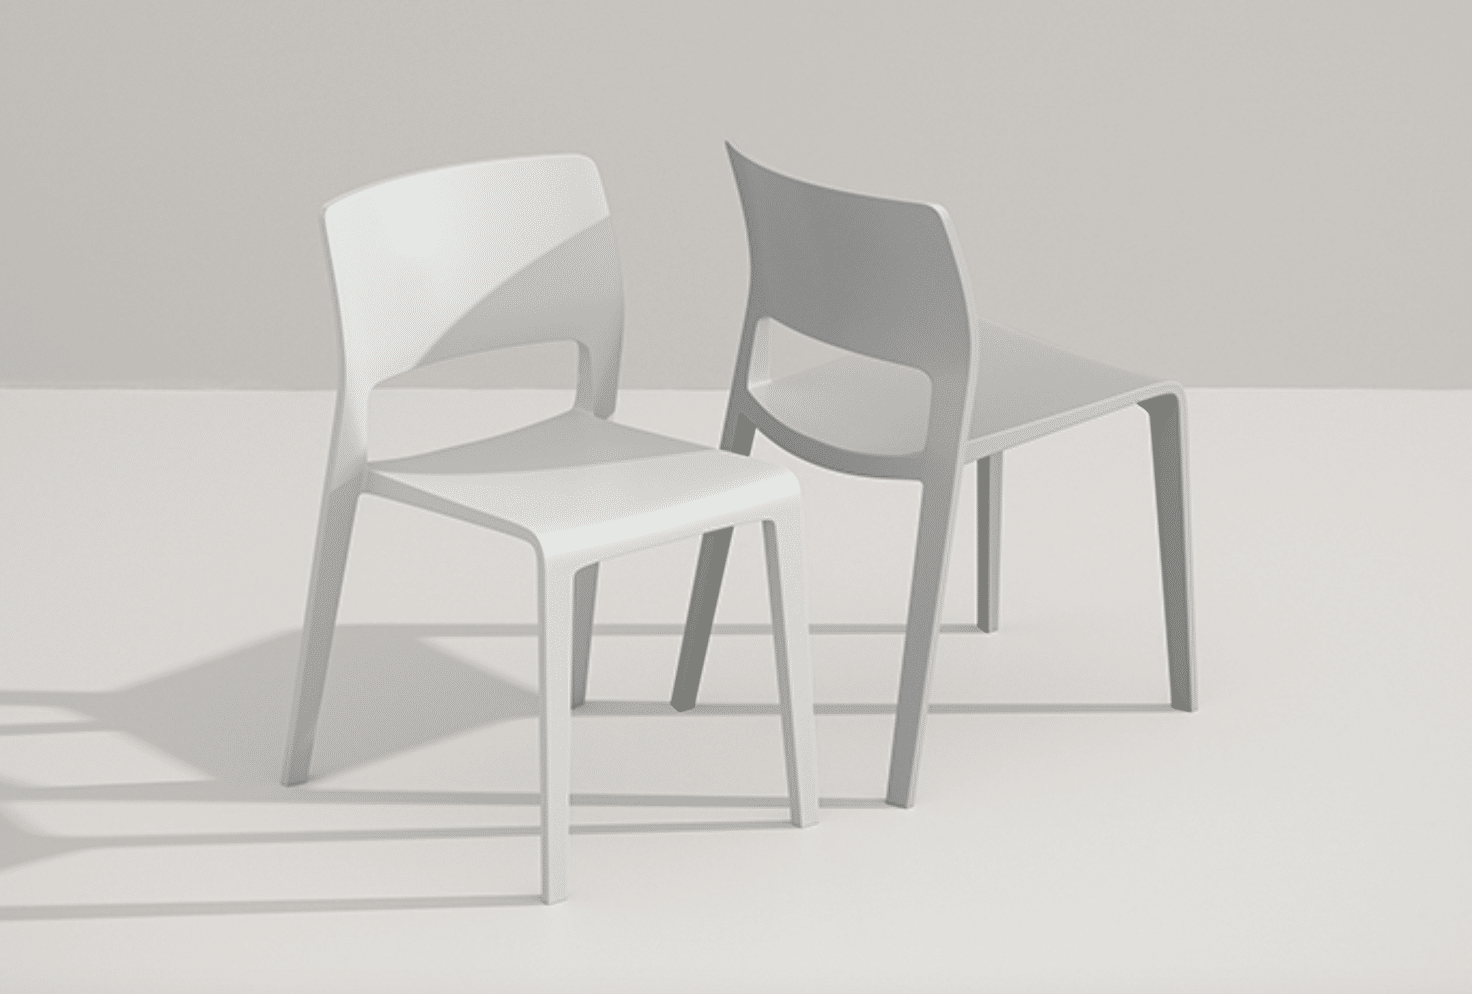 Arper Introduces Sustainable, Indoor/Outdoor Chair